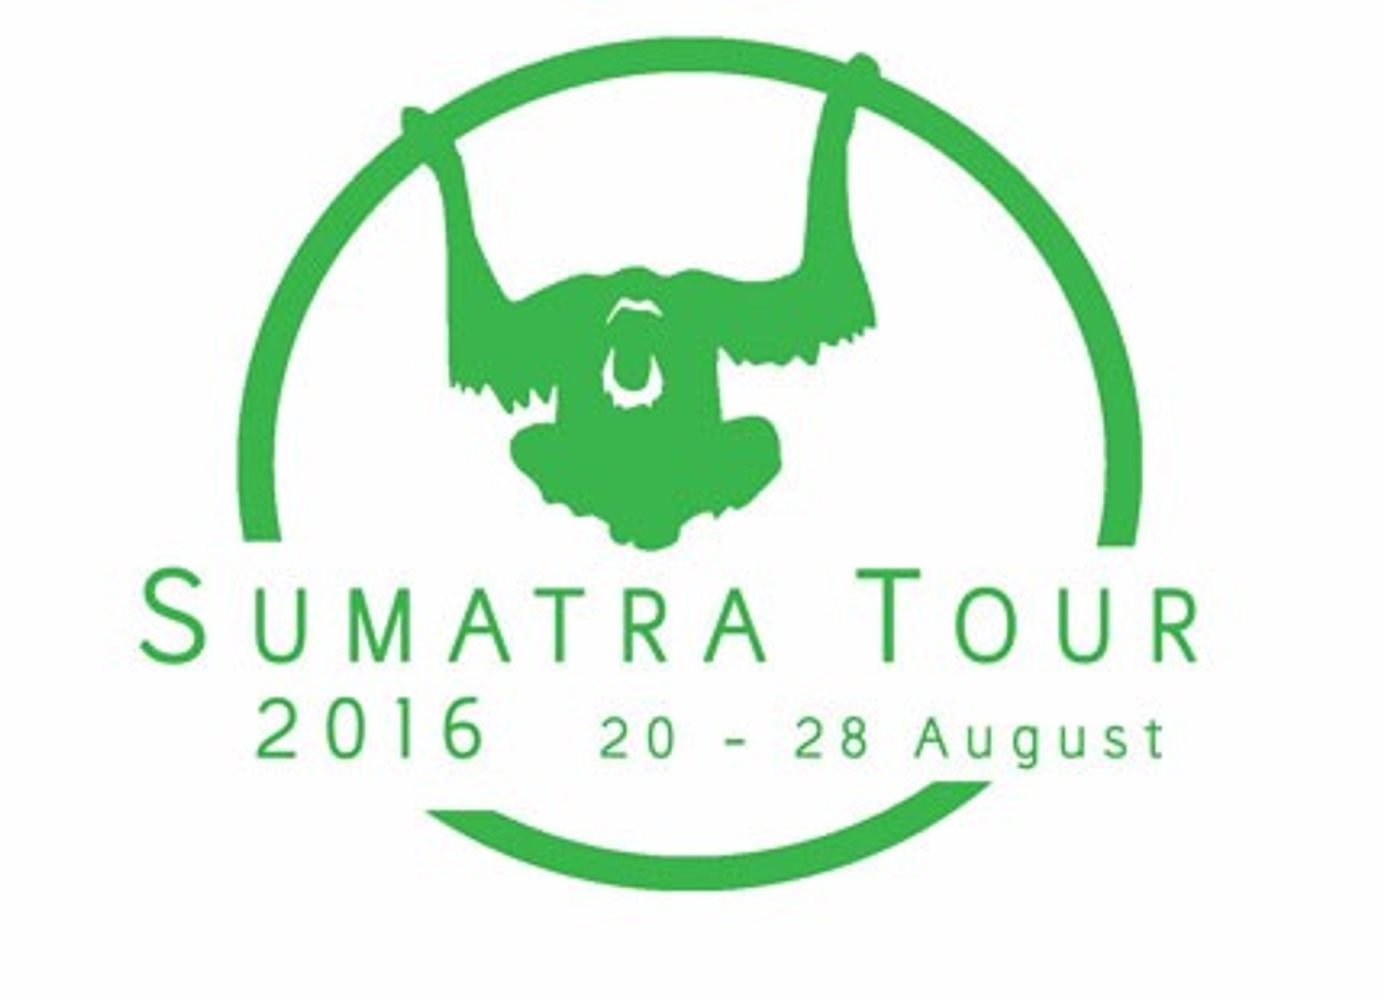 SumatraTour16 - last spot